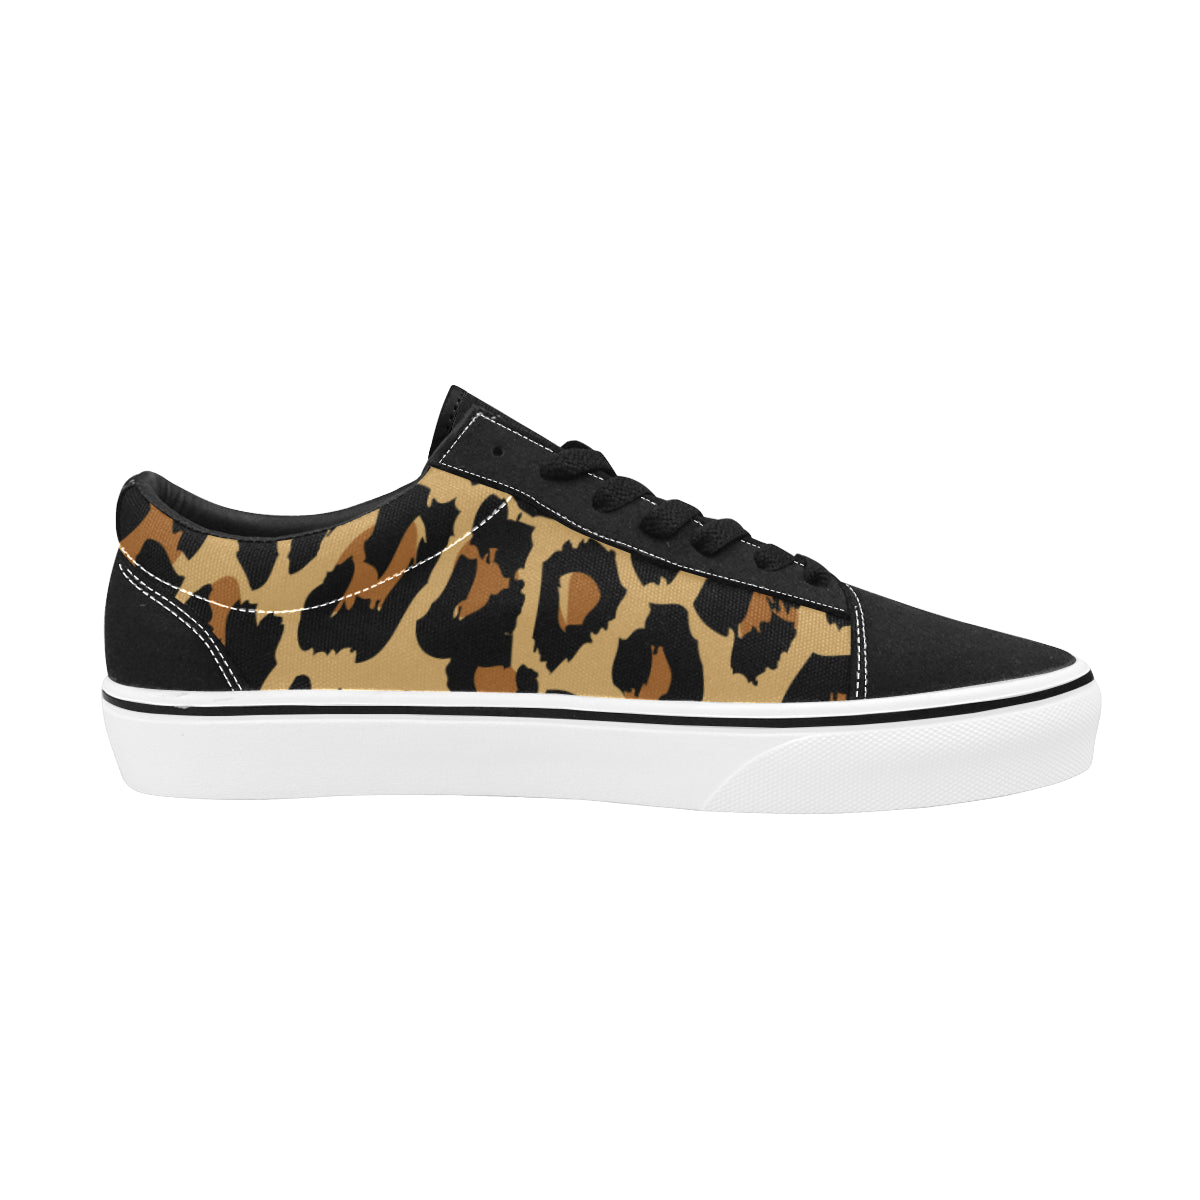 Leopard Women Shoes, Vegan Shoes, Vegan Faux Suede Leather, Animal Leopard Print Cheetah Lace-Up Canvas Sneakers Starcove Fashion